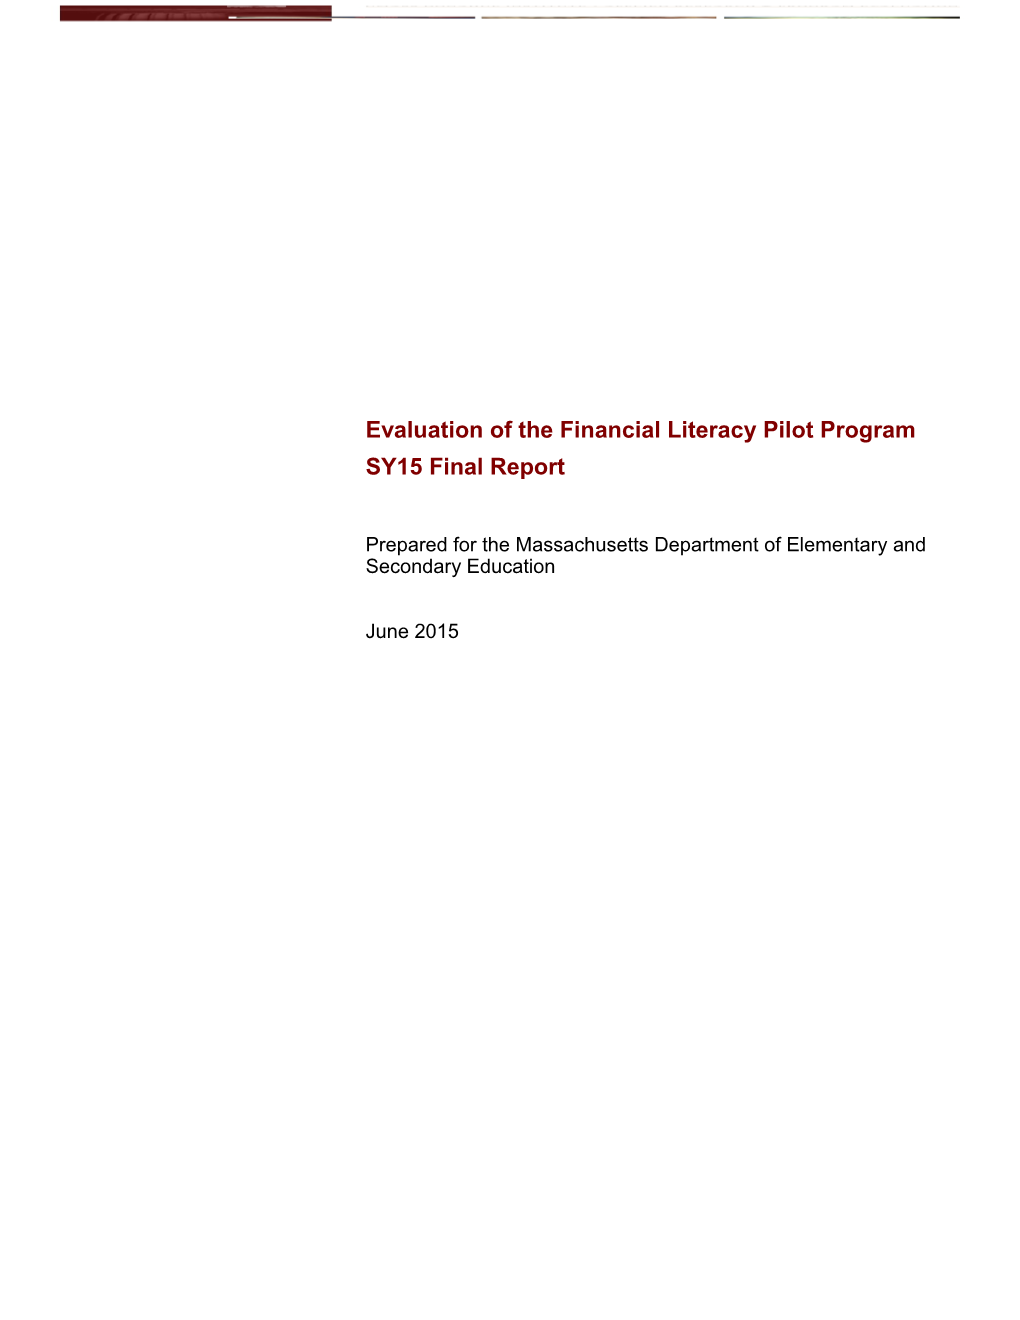 FY15 Financial Literacy Pilot Program Evaluation Report